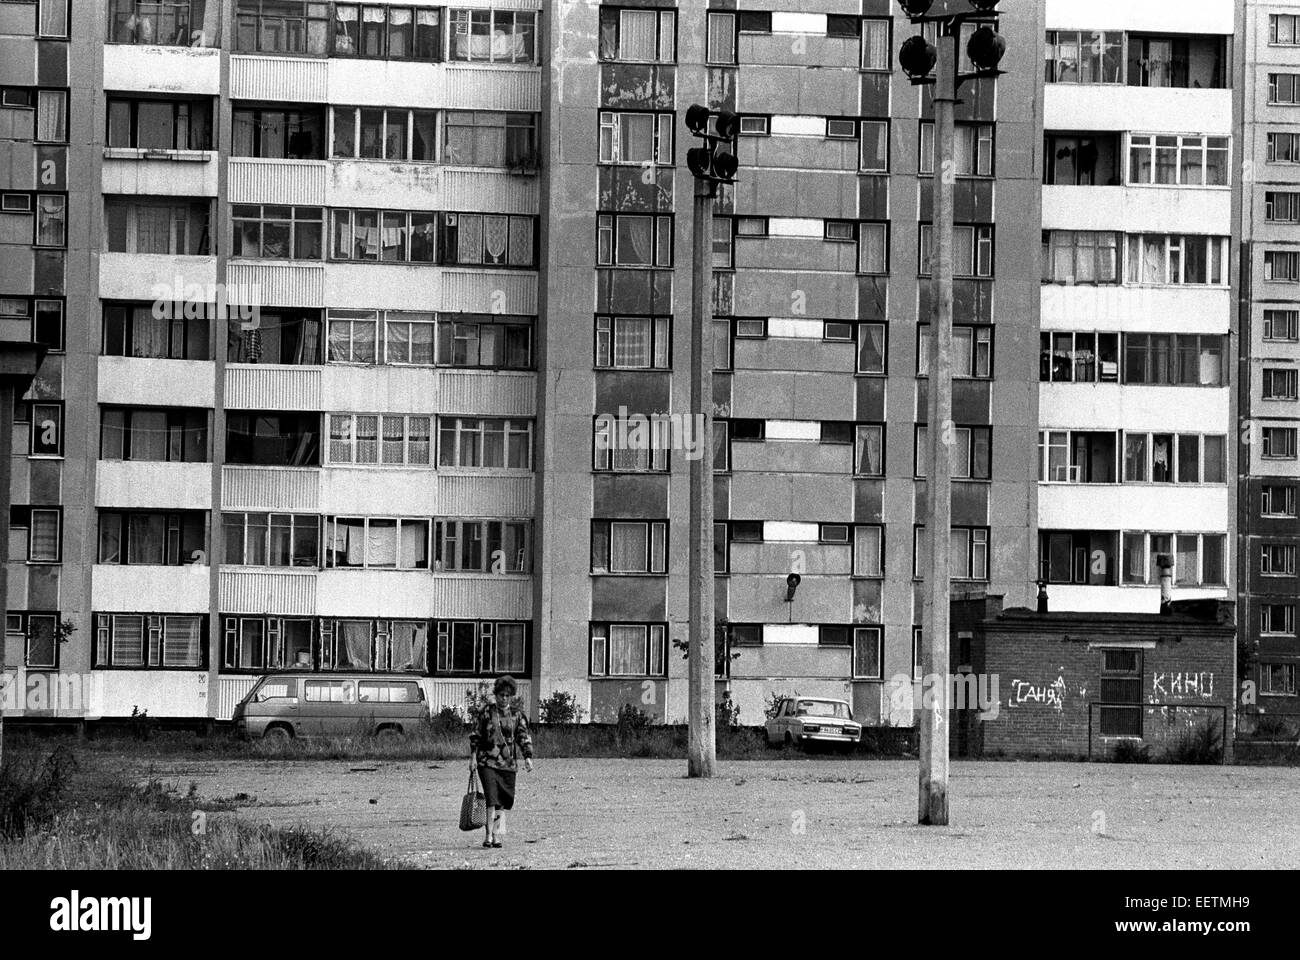 Sty soviético de gran altura de vivienda social en San Petersburgo, Rusia Foto de stock